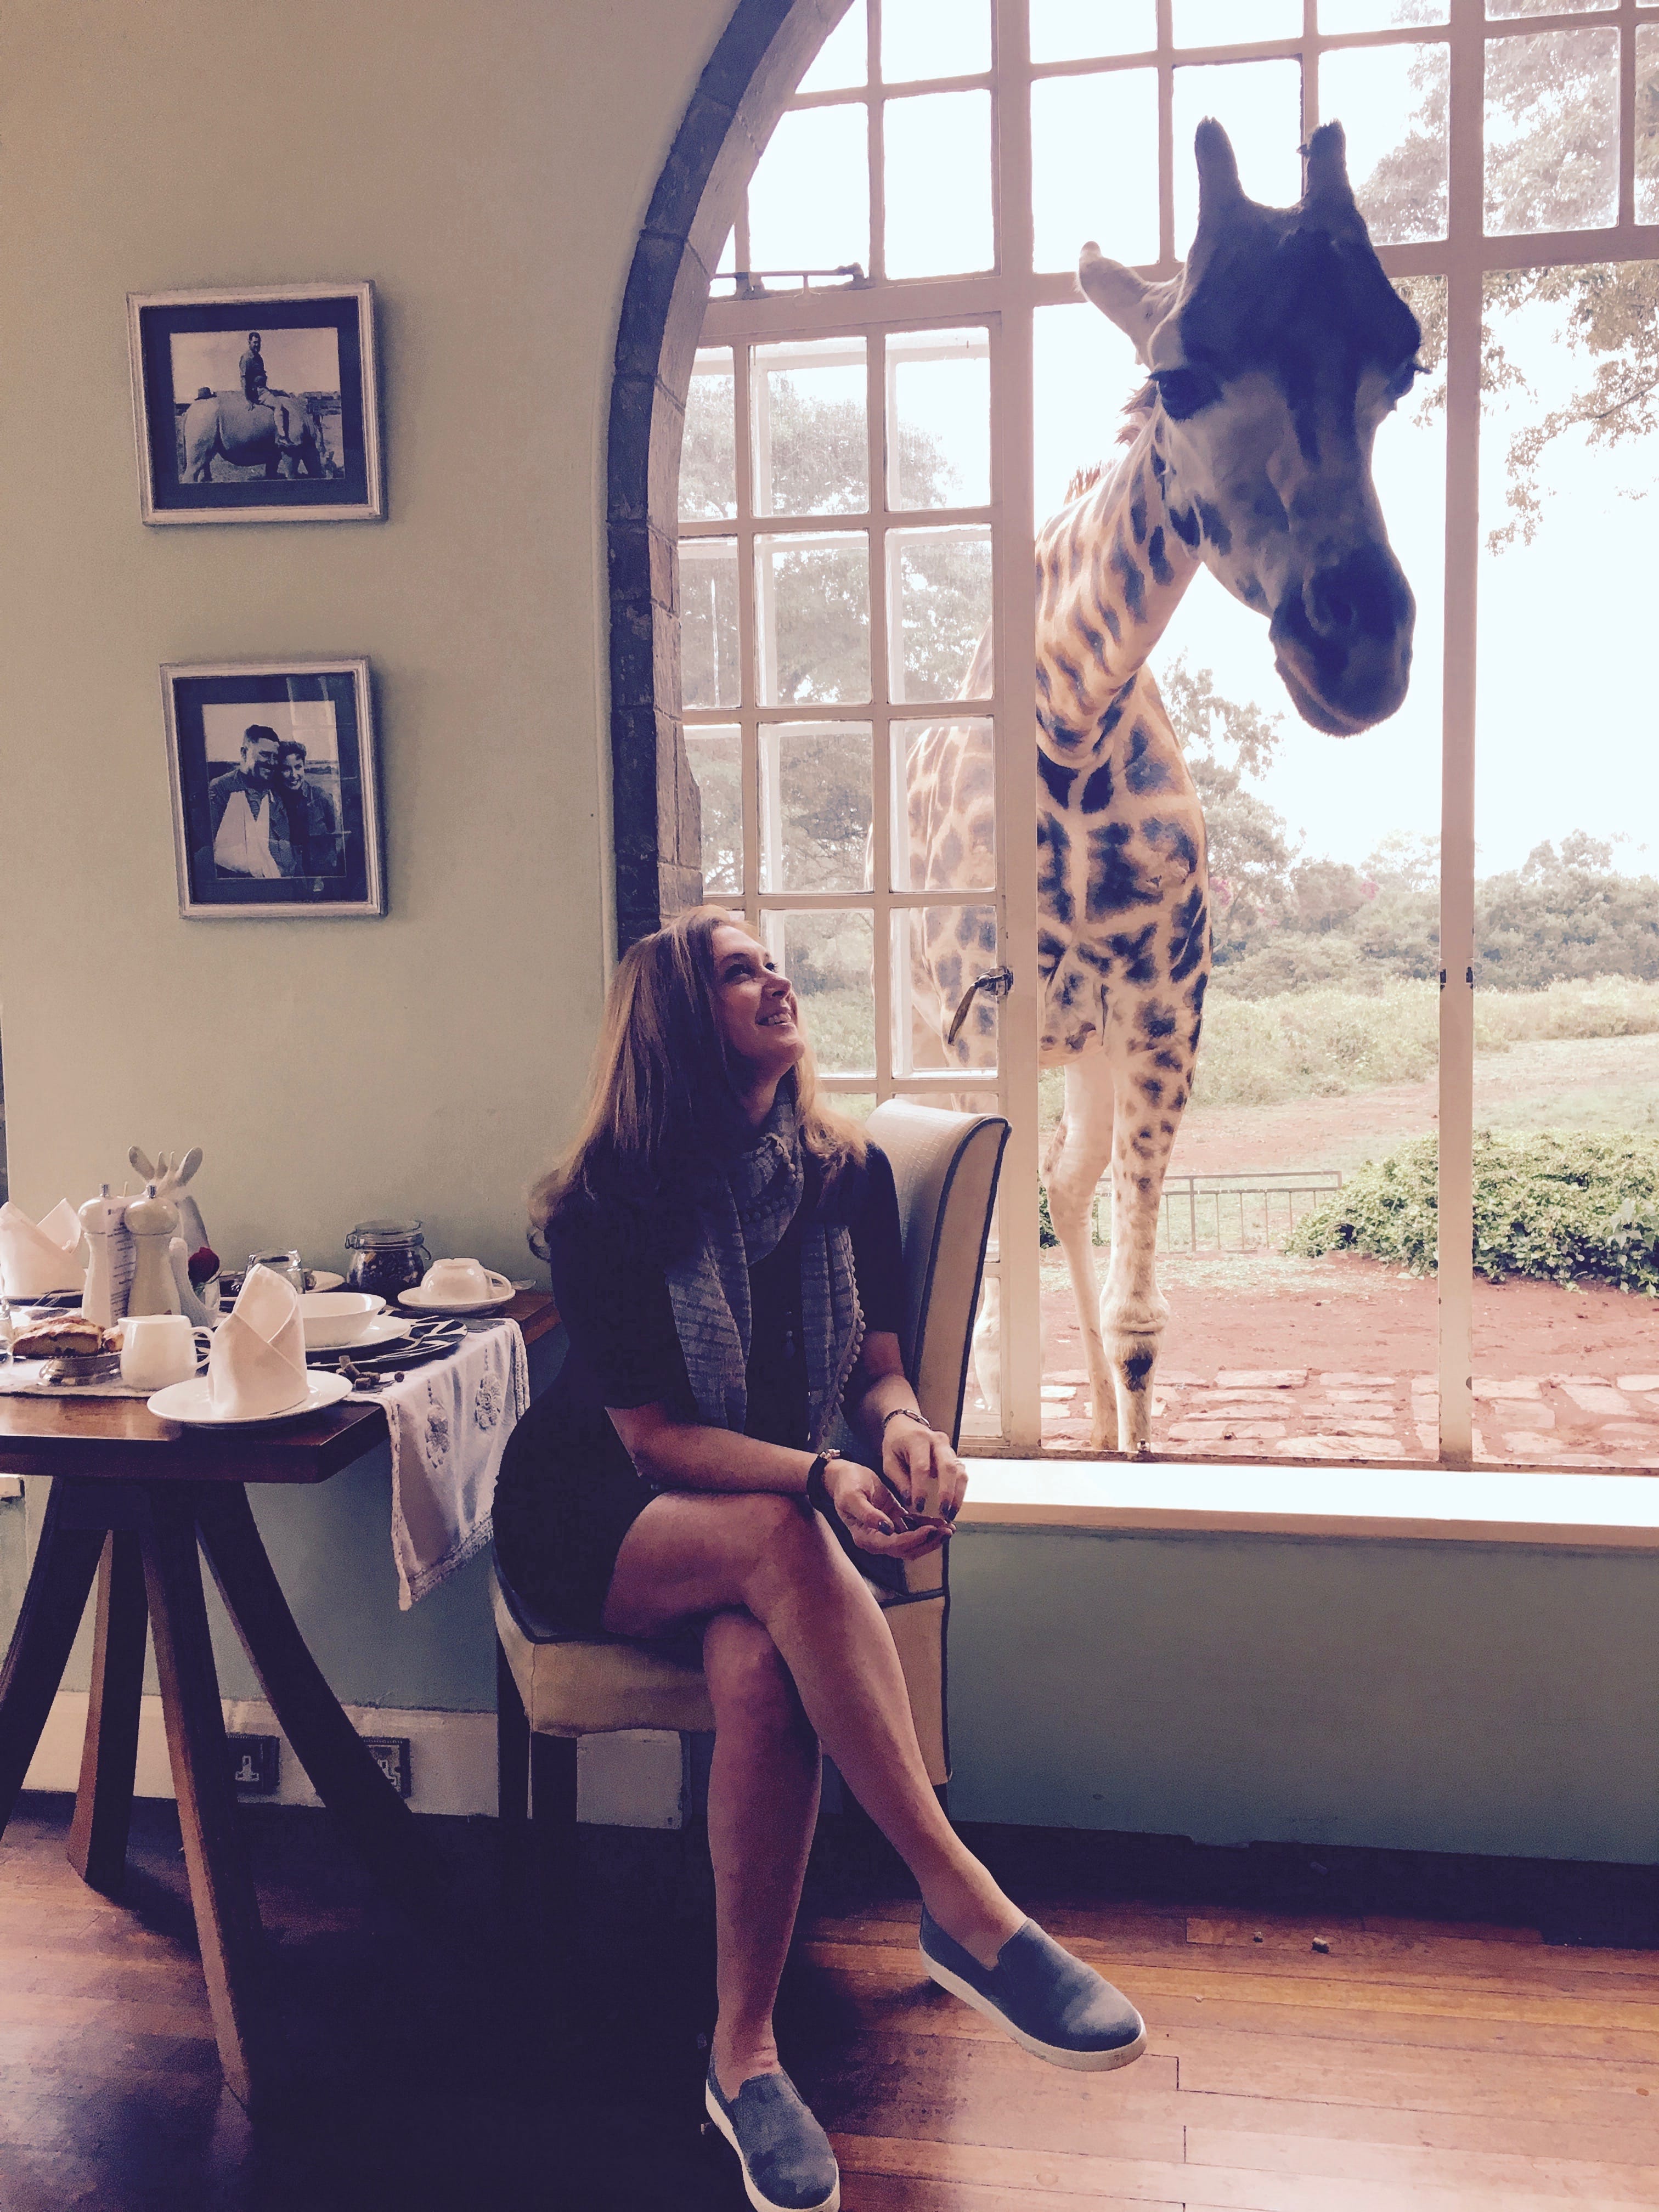 Return to Giraffe Manor in Kenya